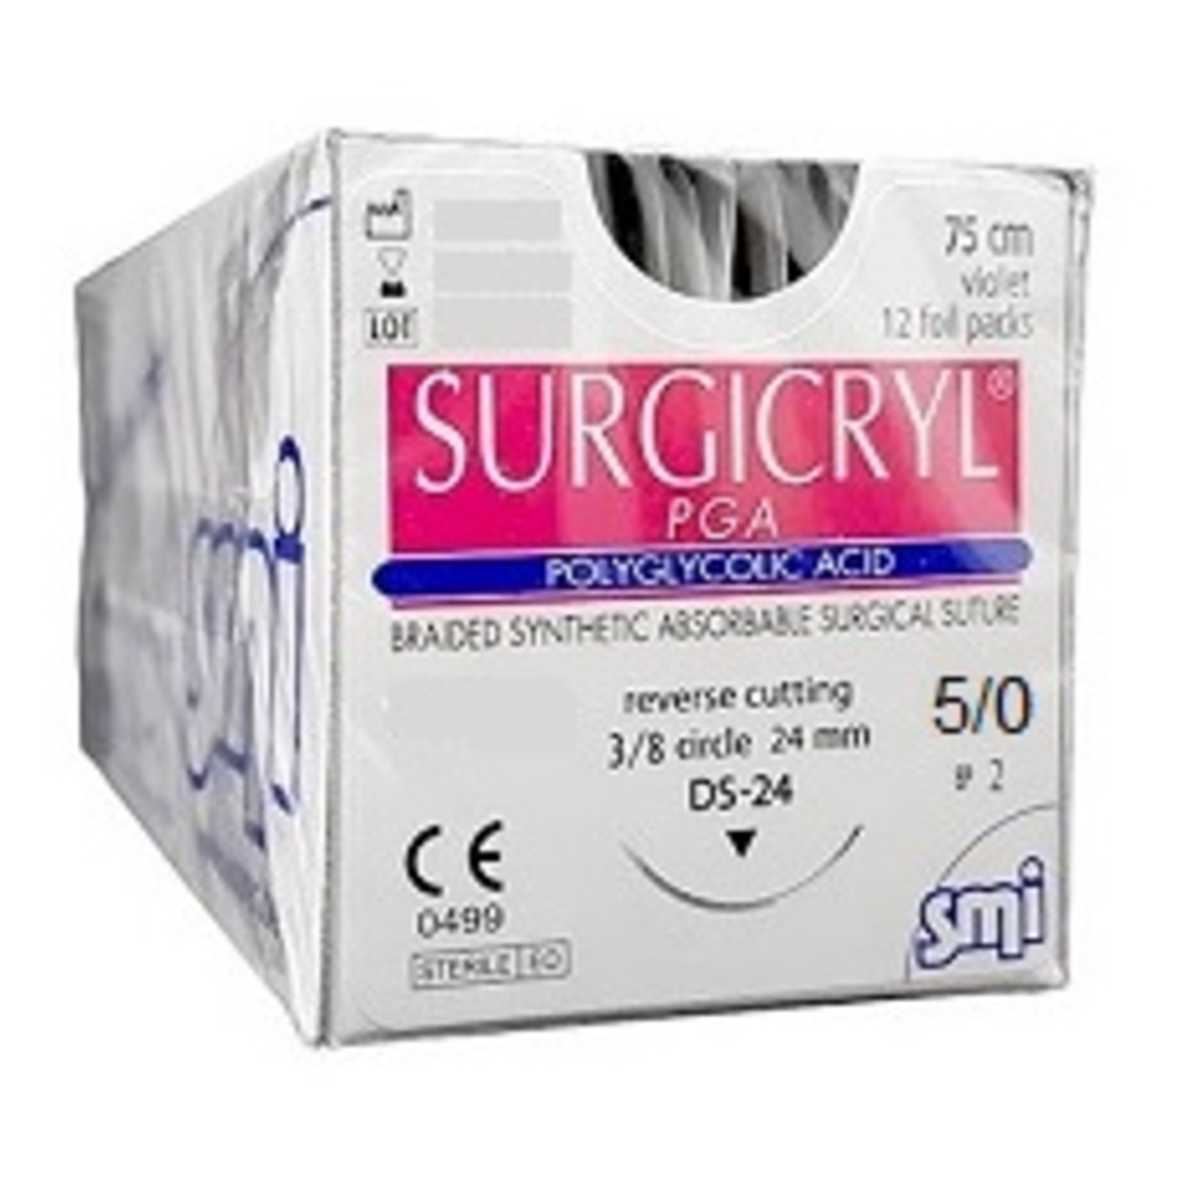 5/0 Surgicryl Pga (Polyglycolic Acid)